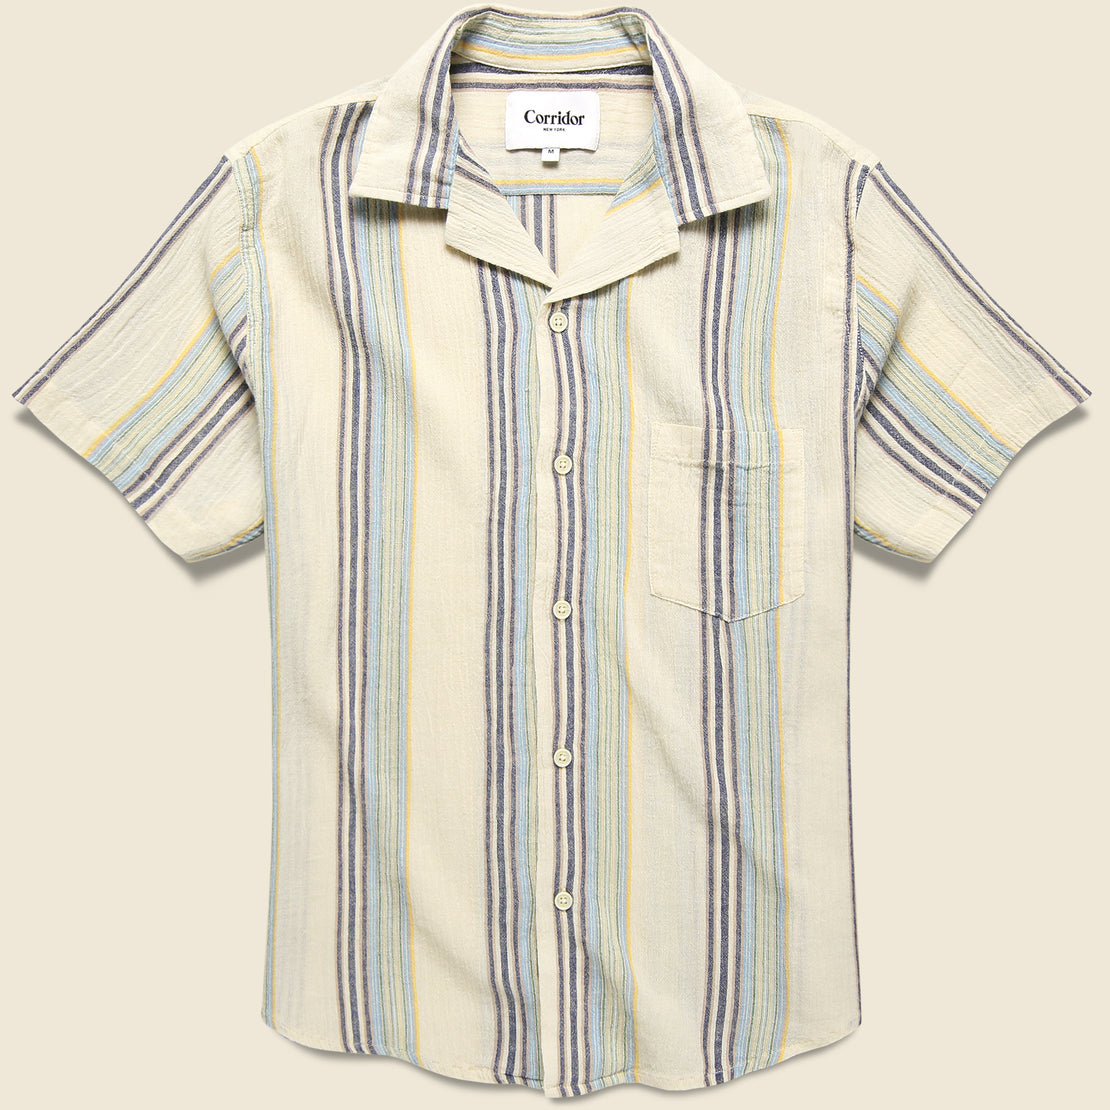 Corridor Beachside Stripe Shirt - Blue Multi/Cream